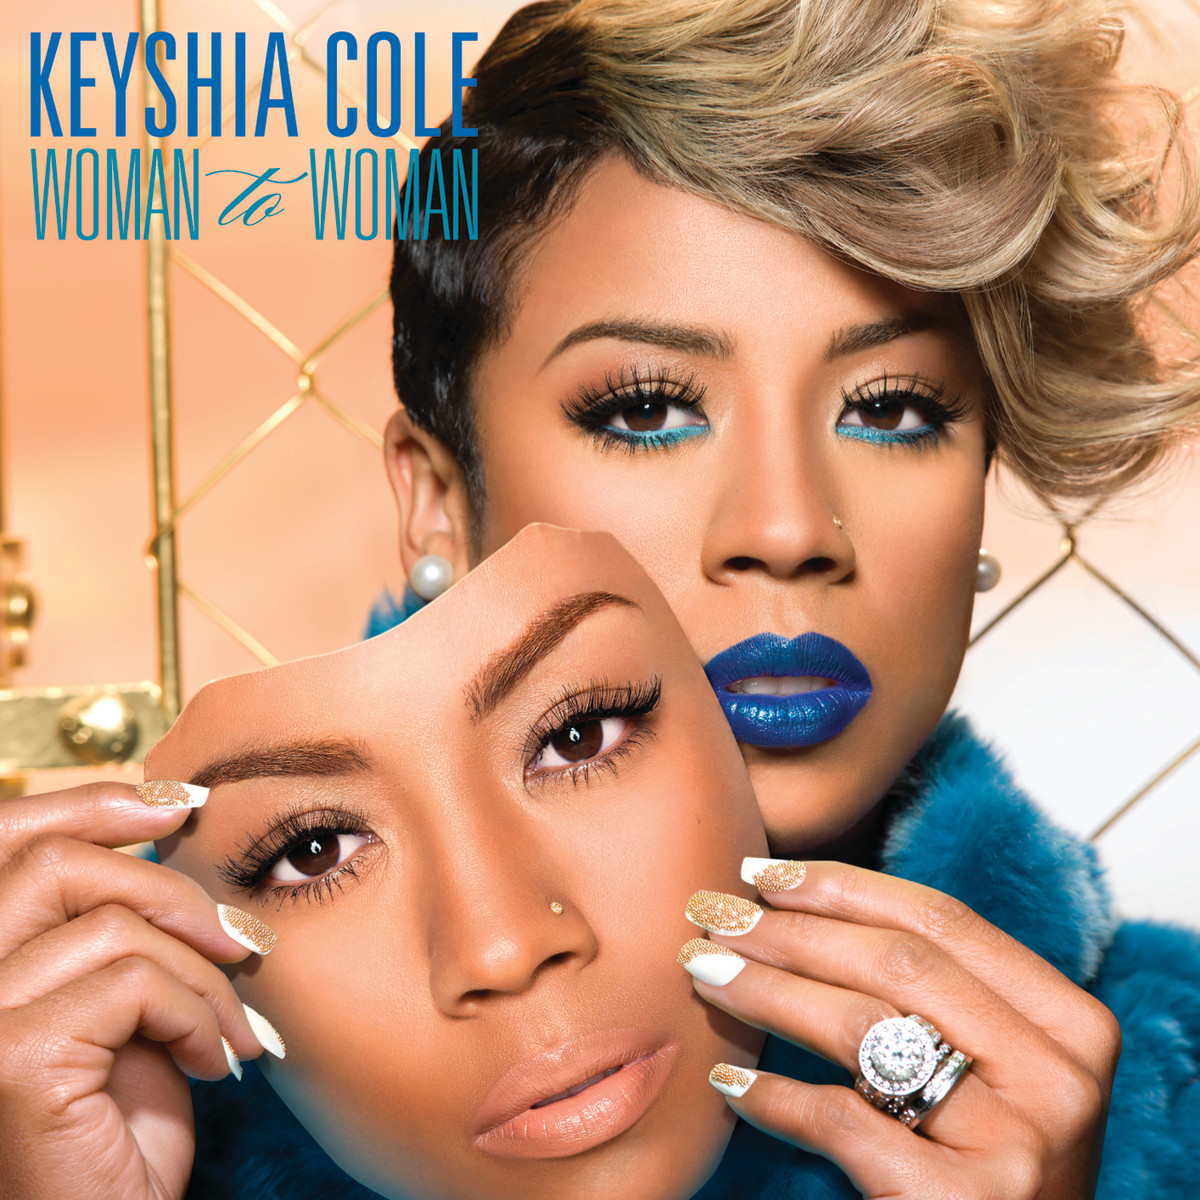 audio review : Woman To Woman ( album ) ... Keyshia Cole